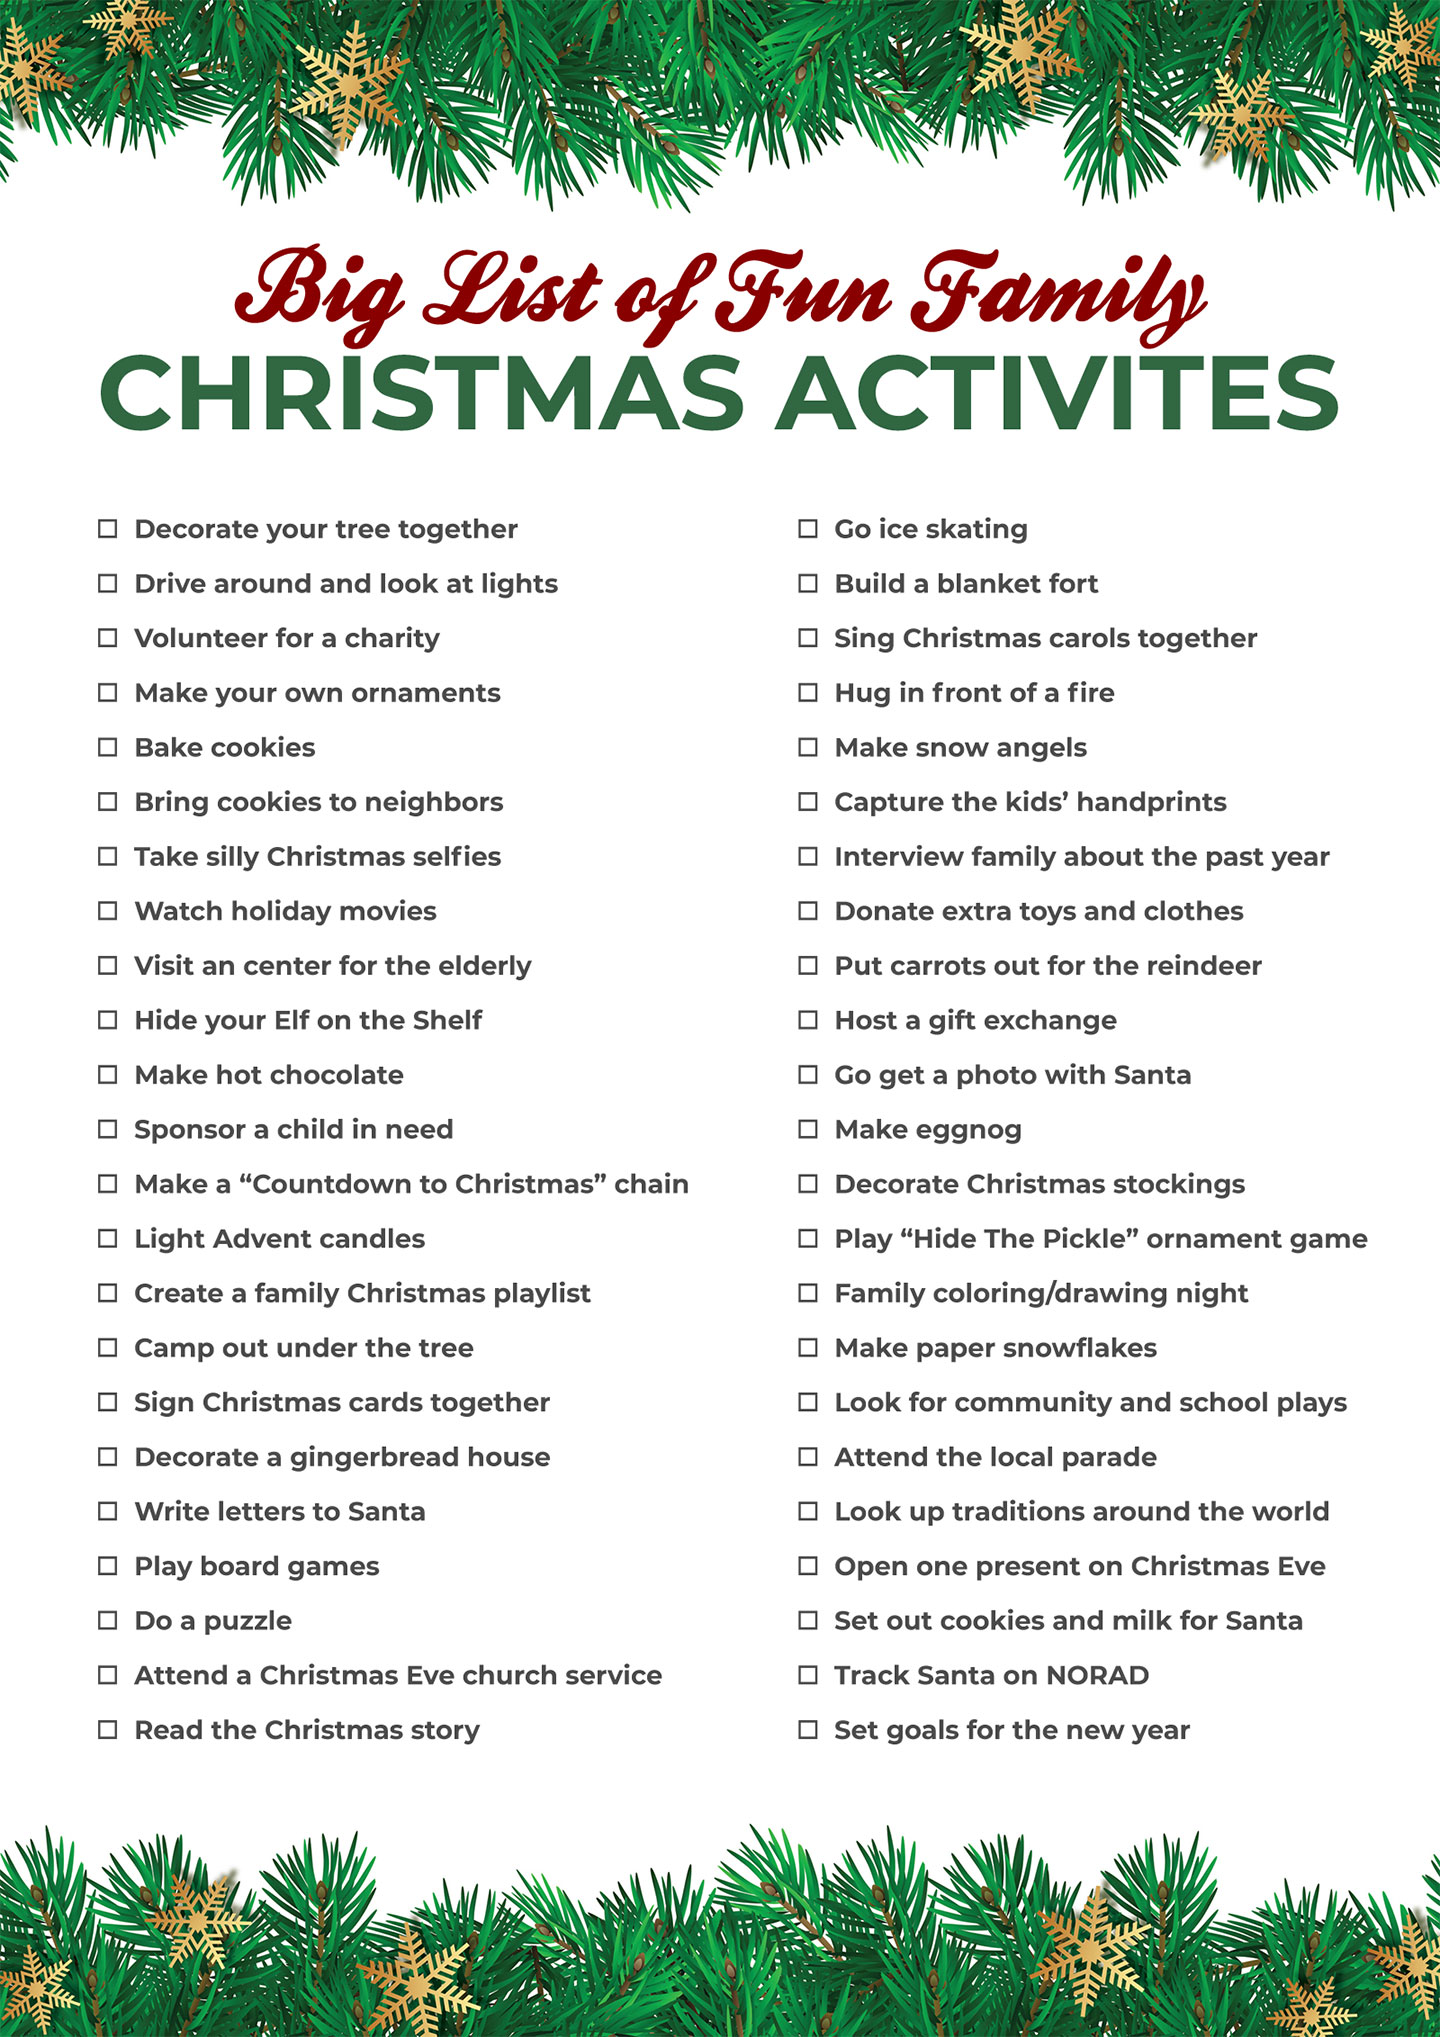 Big List of Family Christmas Activities - Bucket List for Family Fun at Christmas